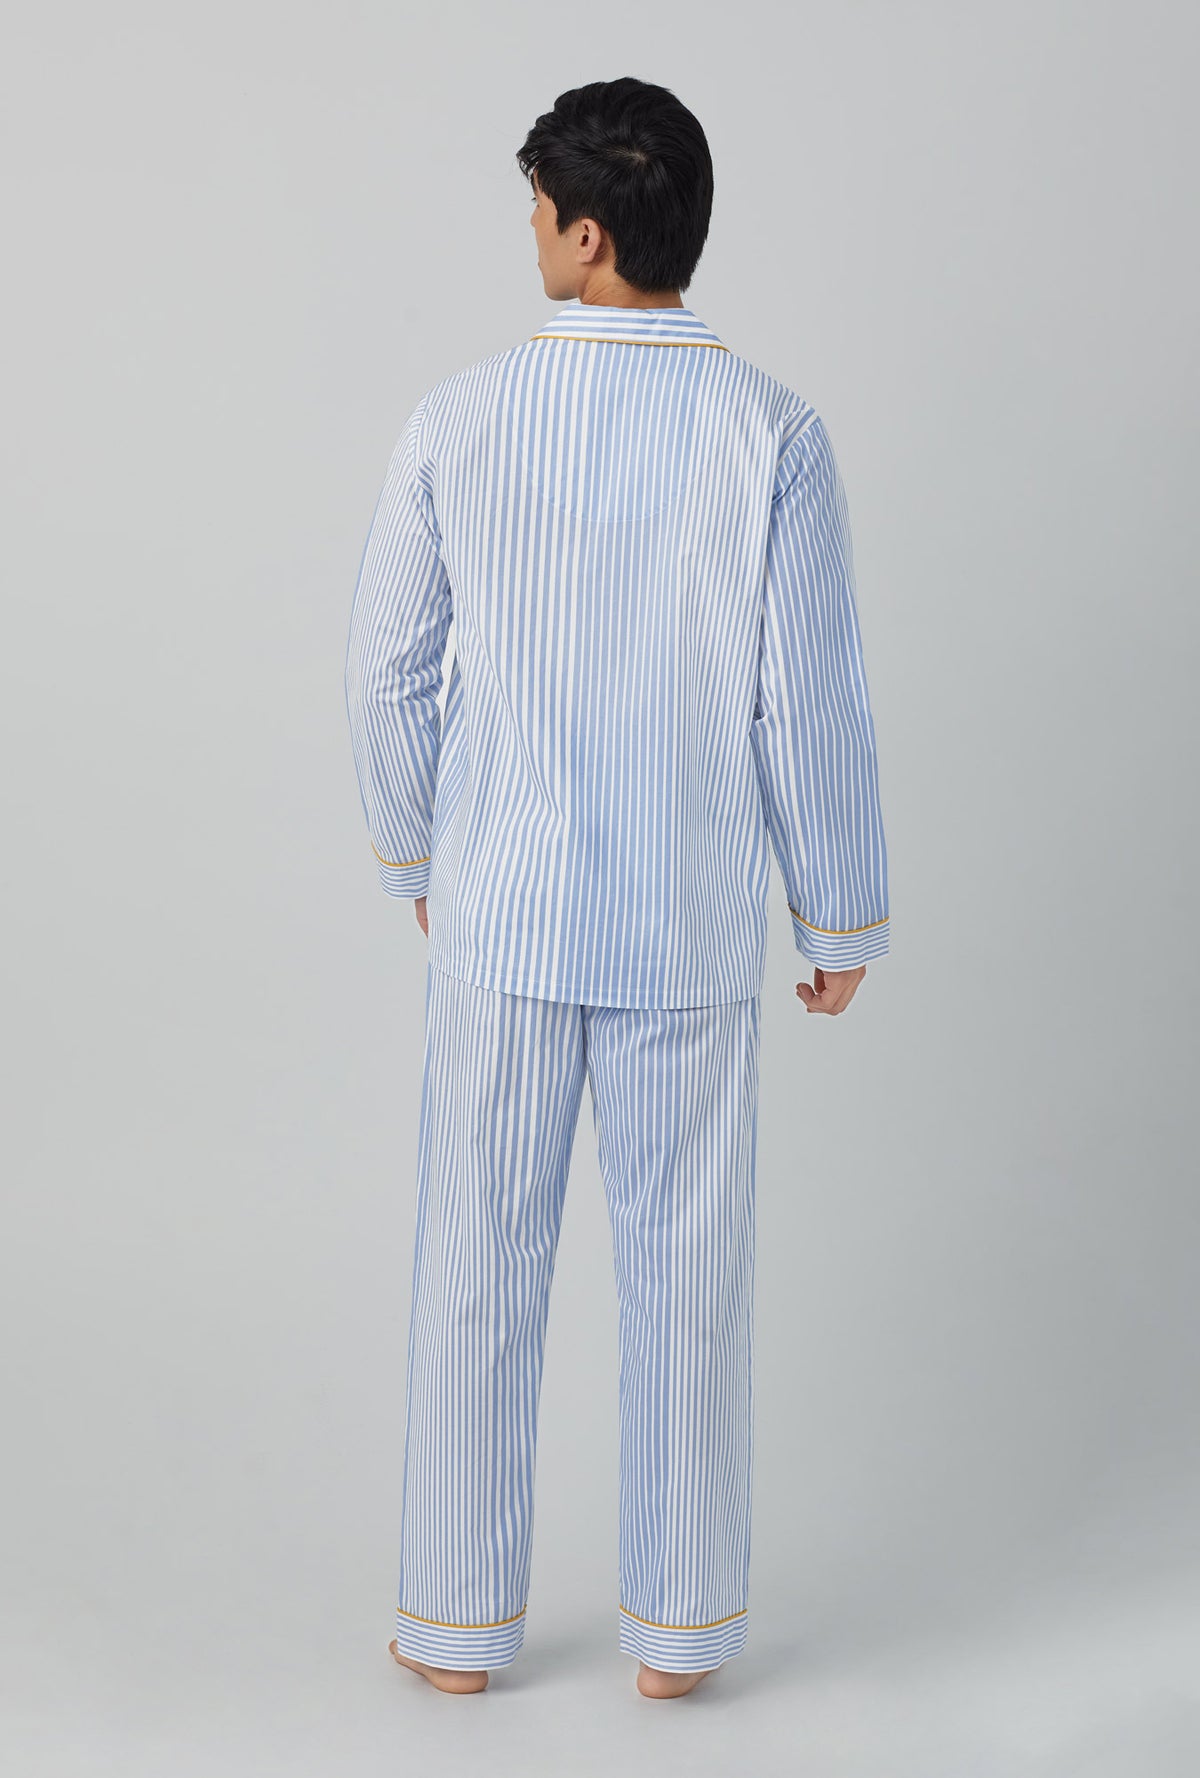 A men wearing blue Long Sleeve Classic Woven Cotton Poplin PJ Set with Modern Stripe print